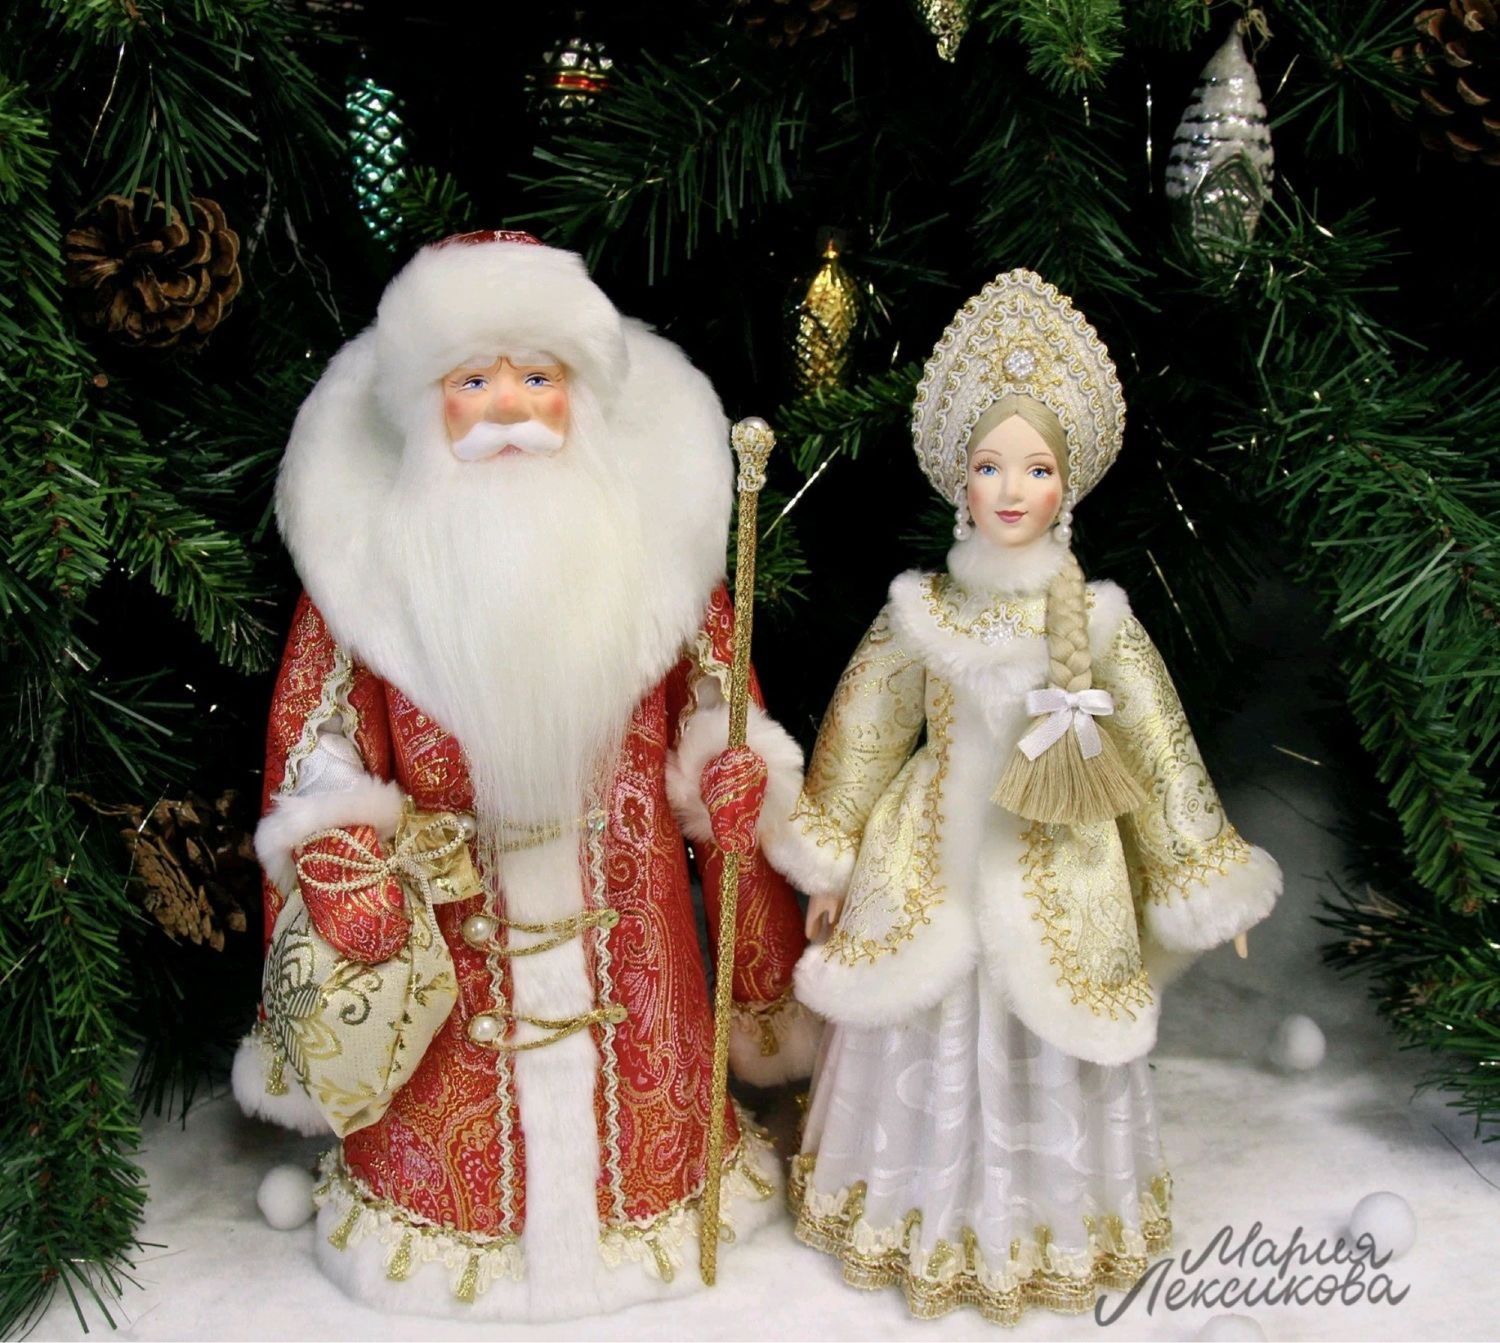 Дед Мороз со Снегурочкой - ФибиКидс